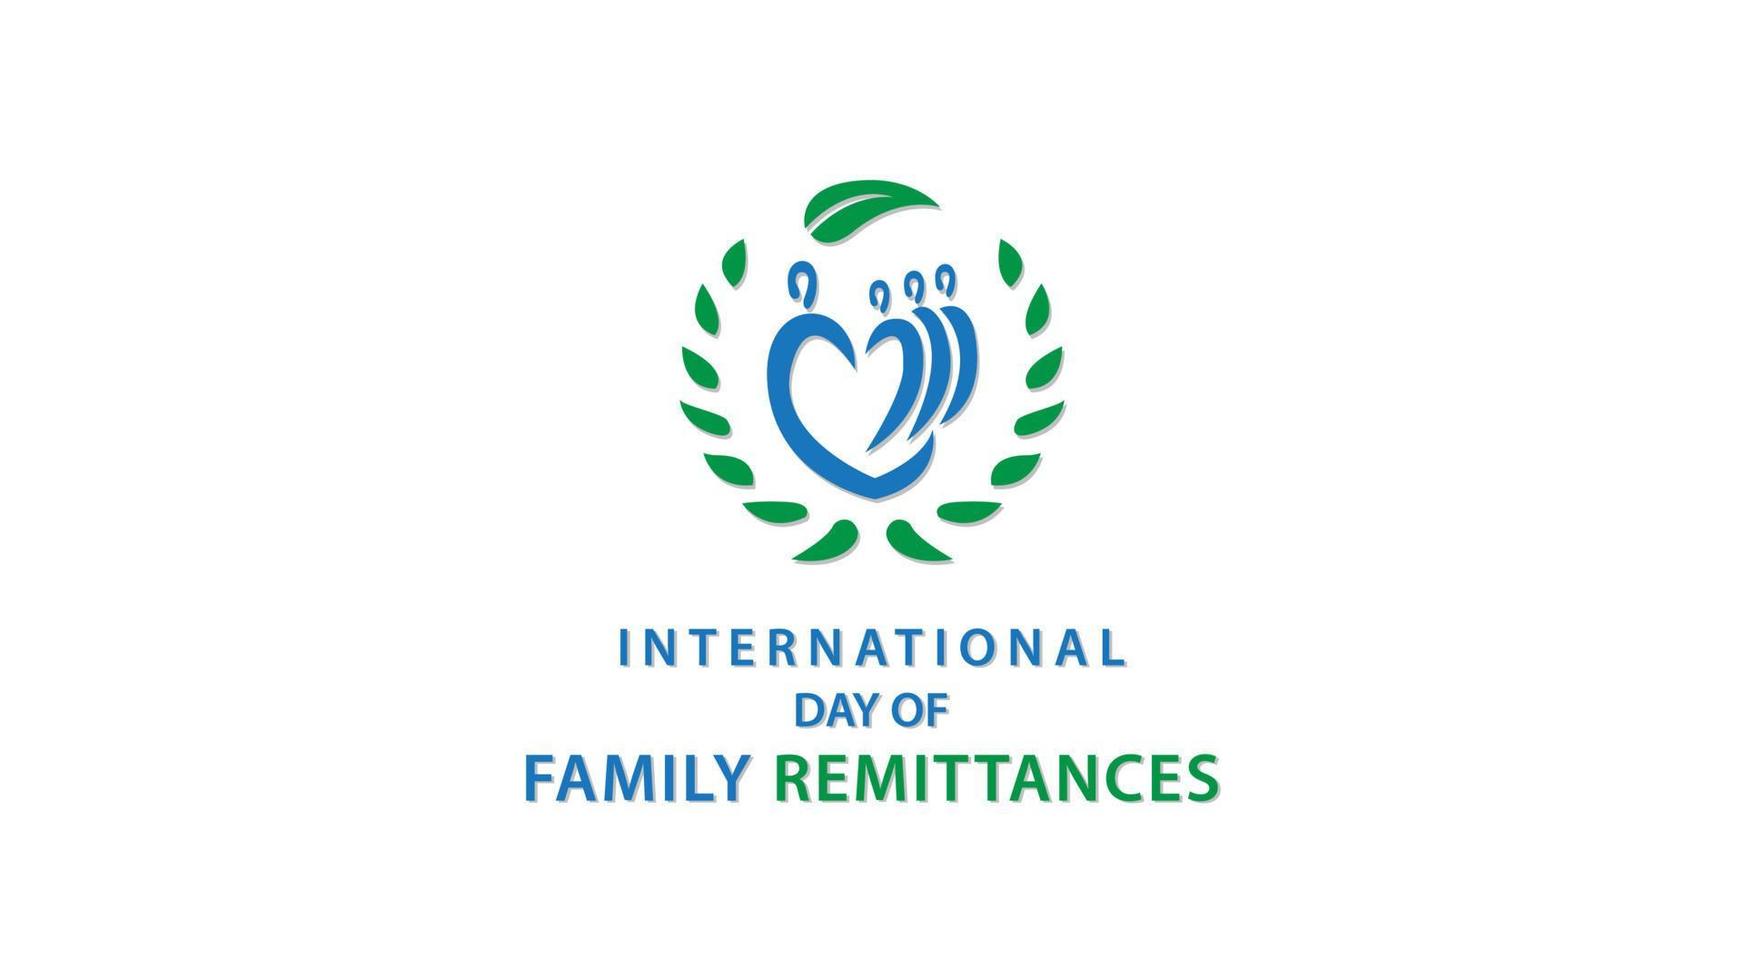 International Day of Family Remittances. Vector illustration